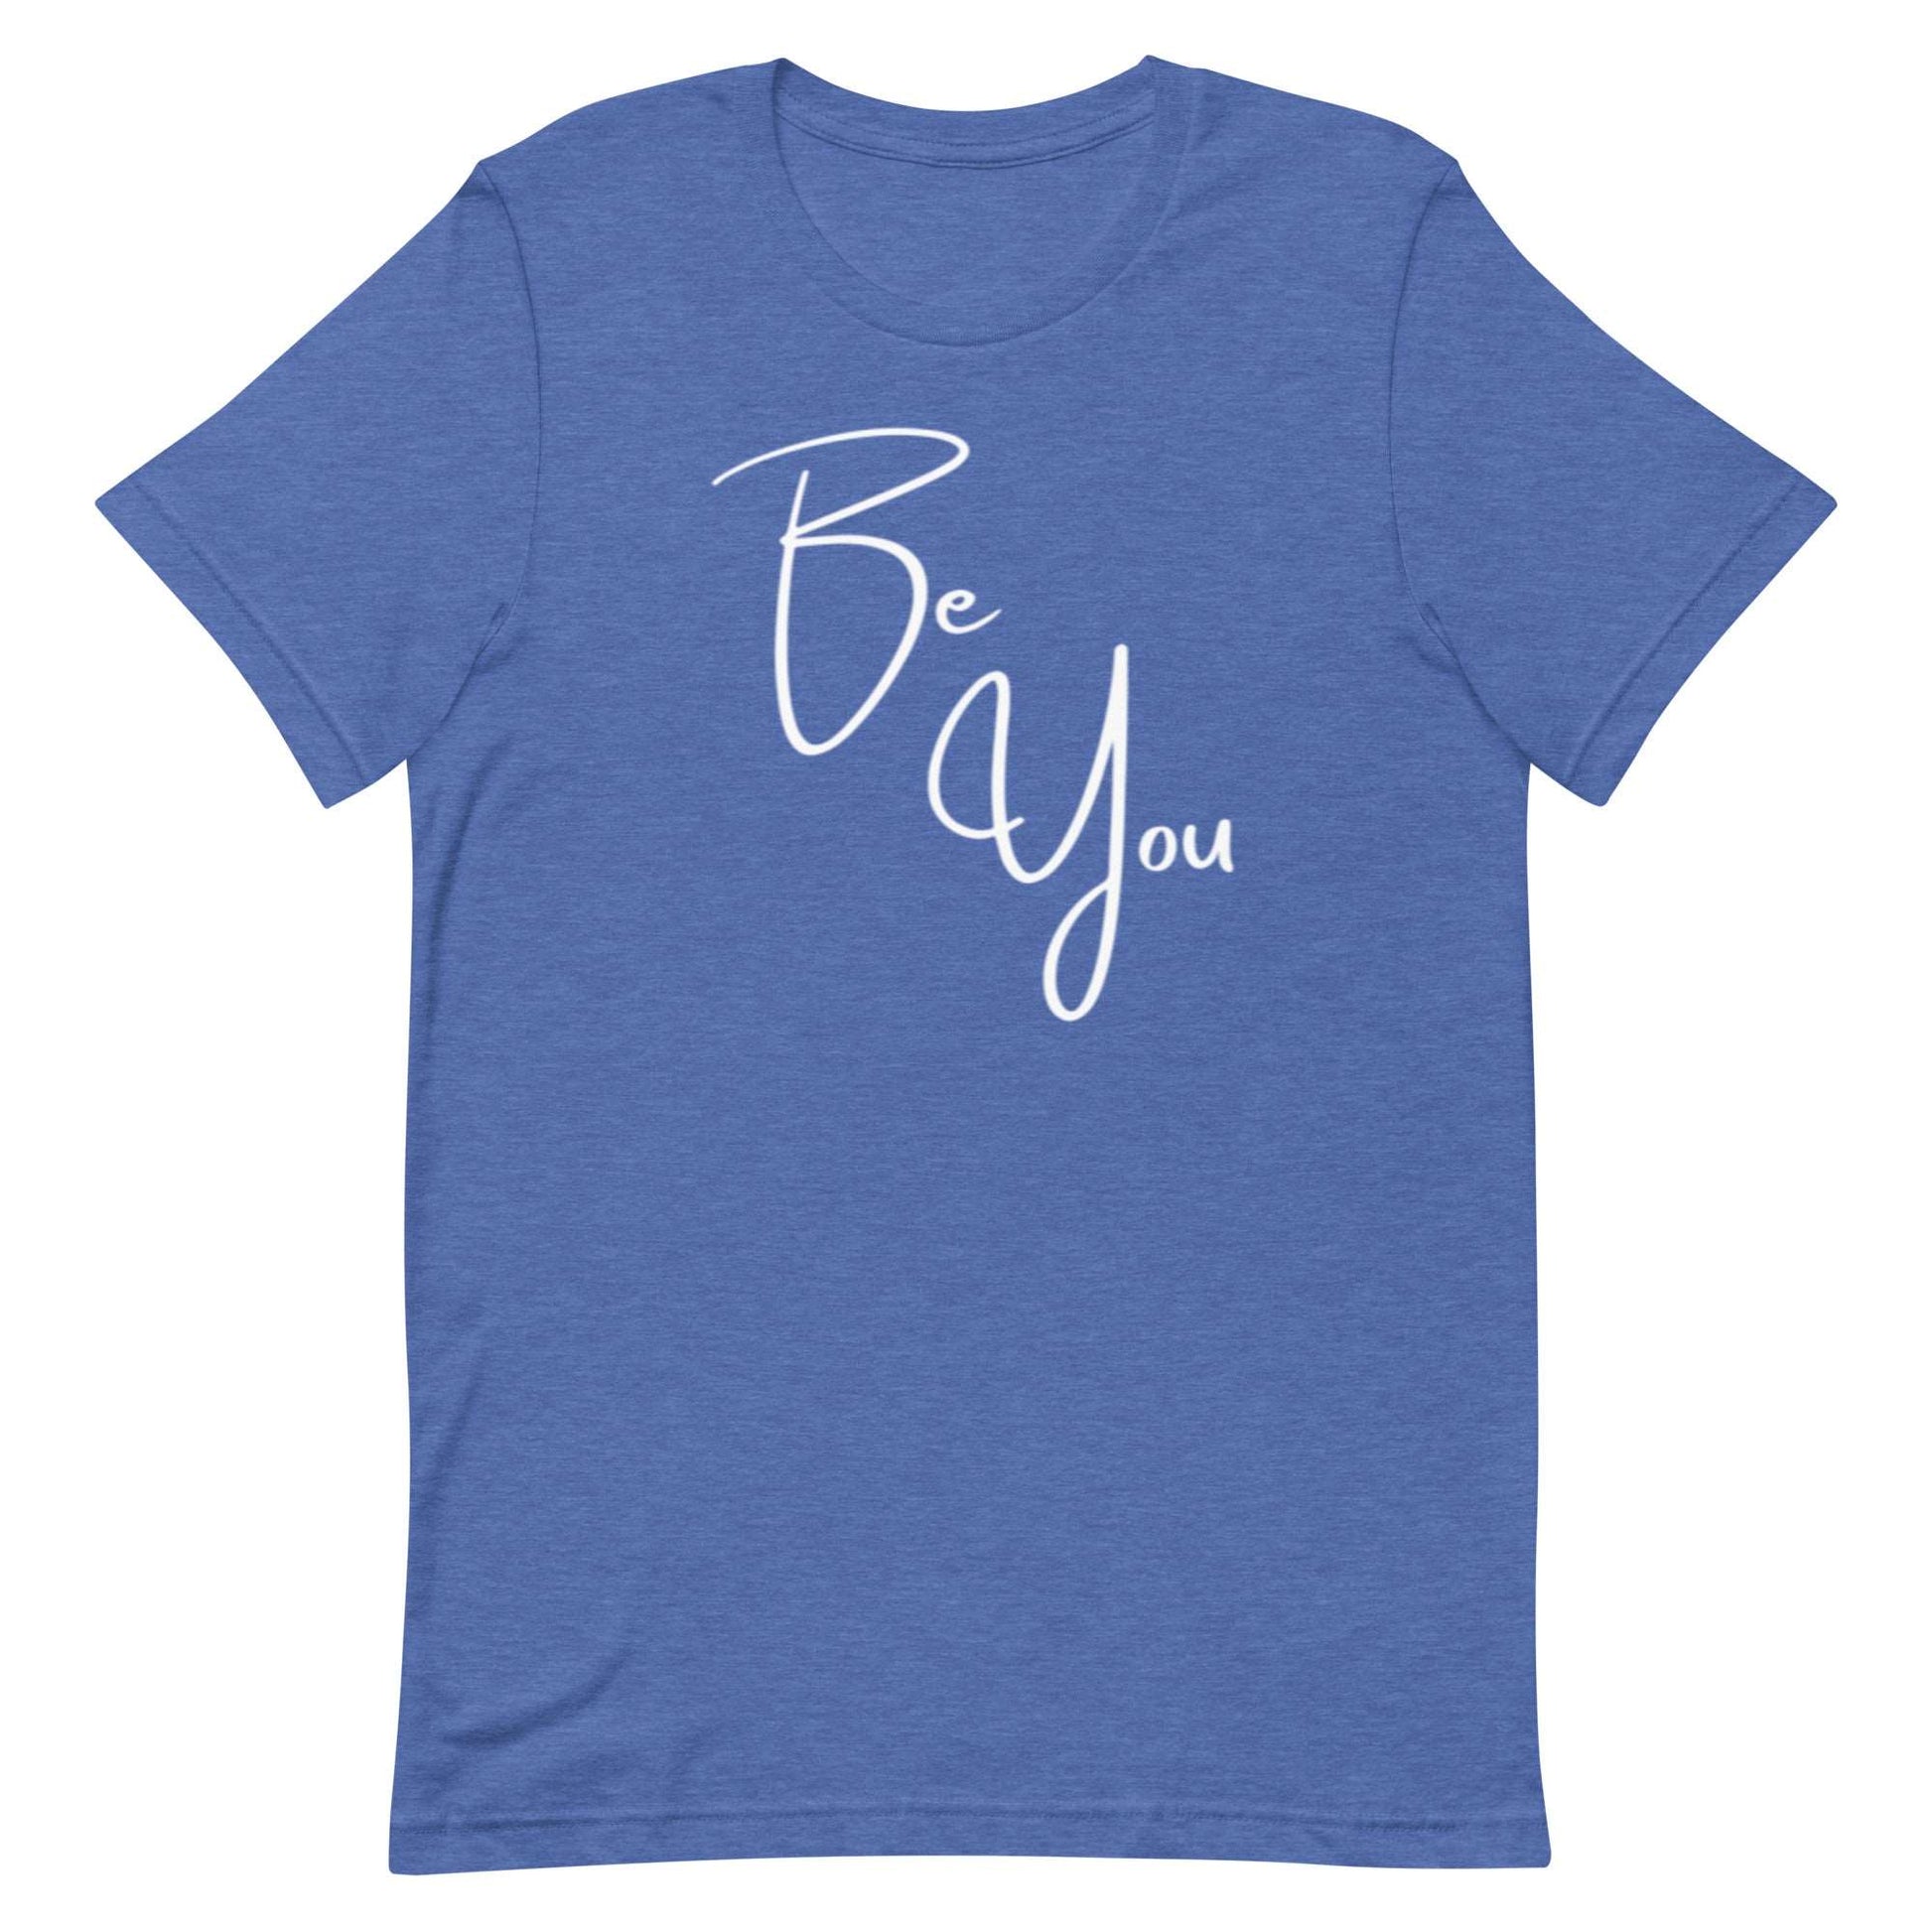 Be You! Unisex T-shirt